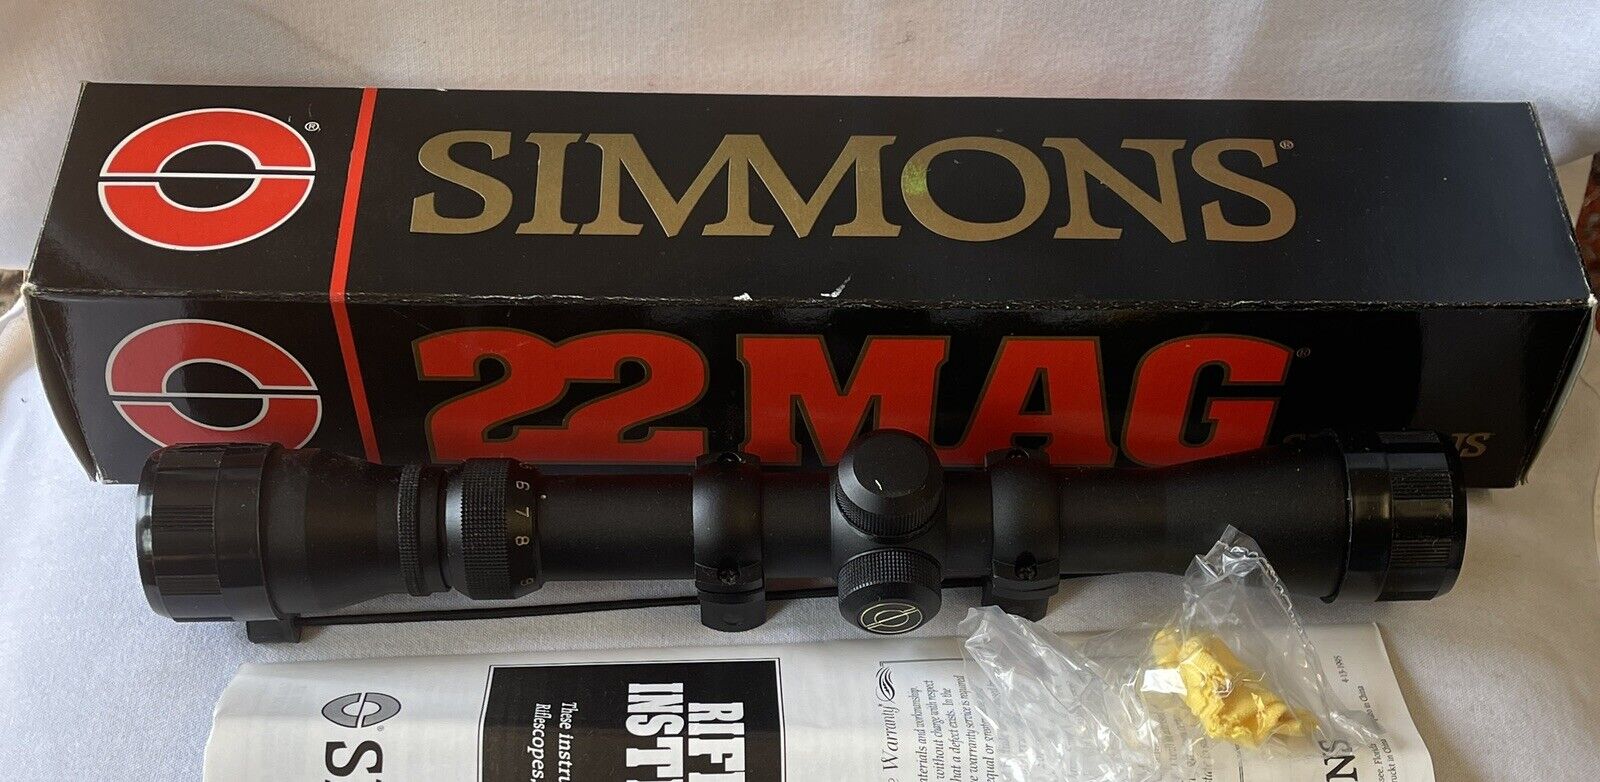 Simmons 3-9x32mm .22 Waterproof Fogproof Matte Black Riflescope